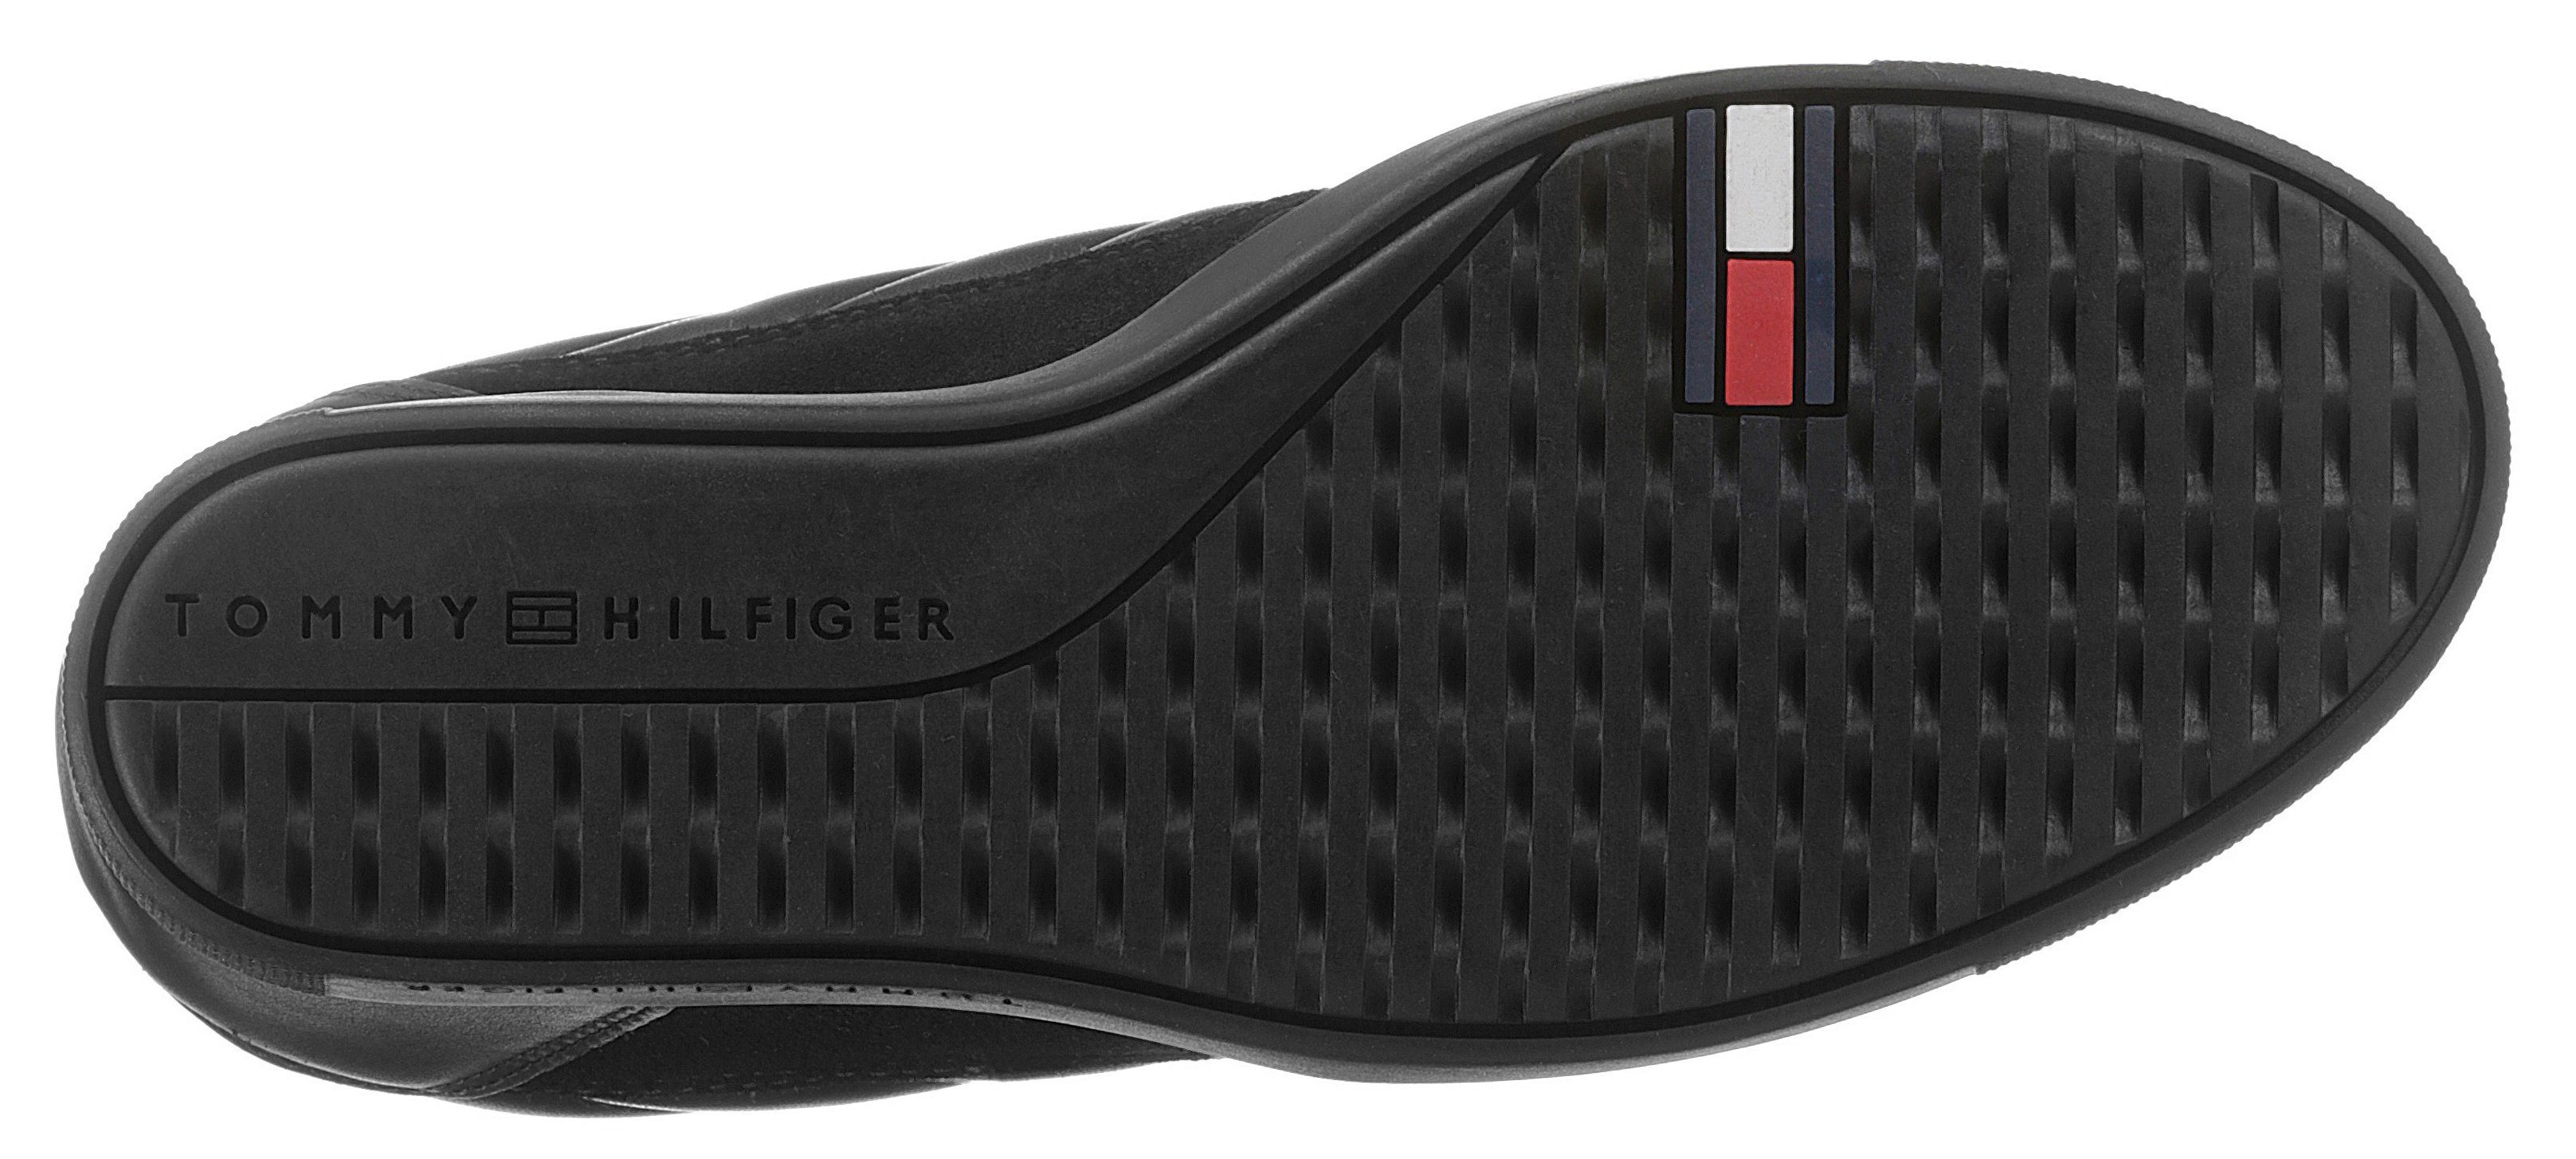 Tommy Hilfiger WEDGE SNEAKER BOOT Keilsneaker mit innenliegendem Keilabsatz